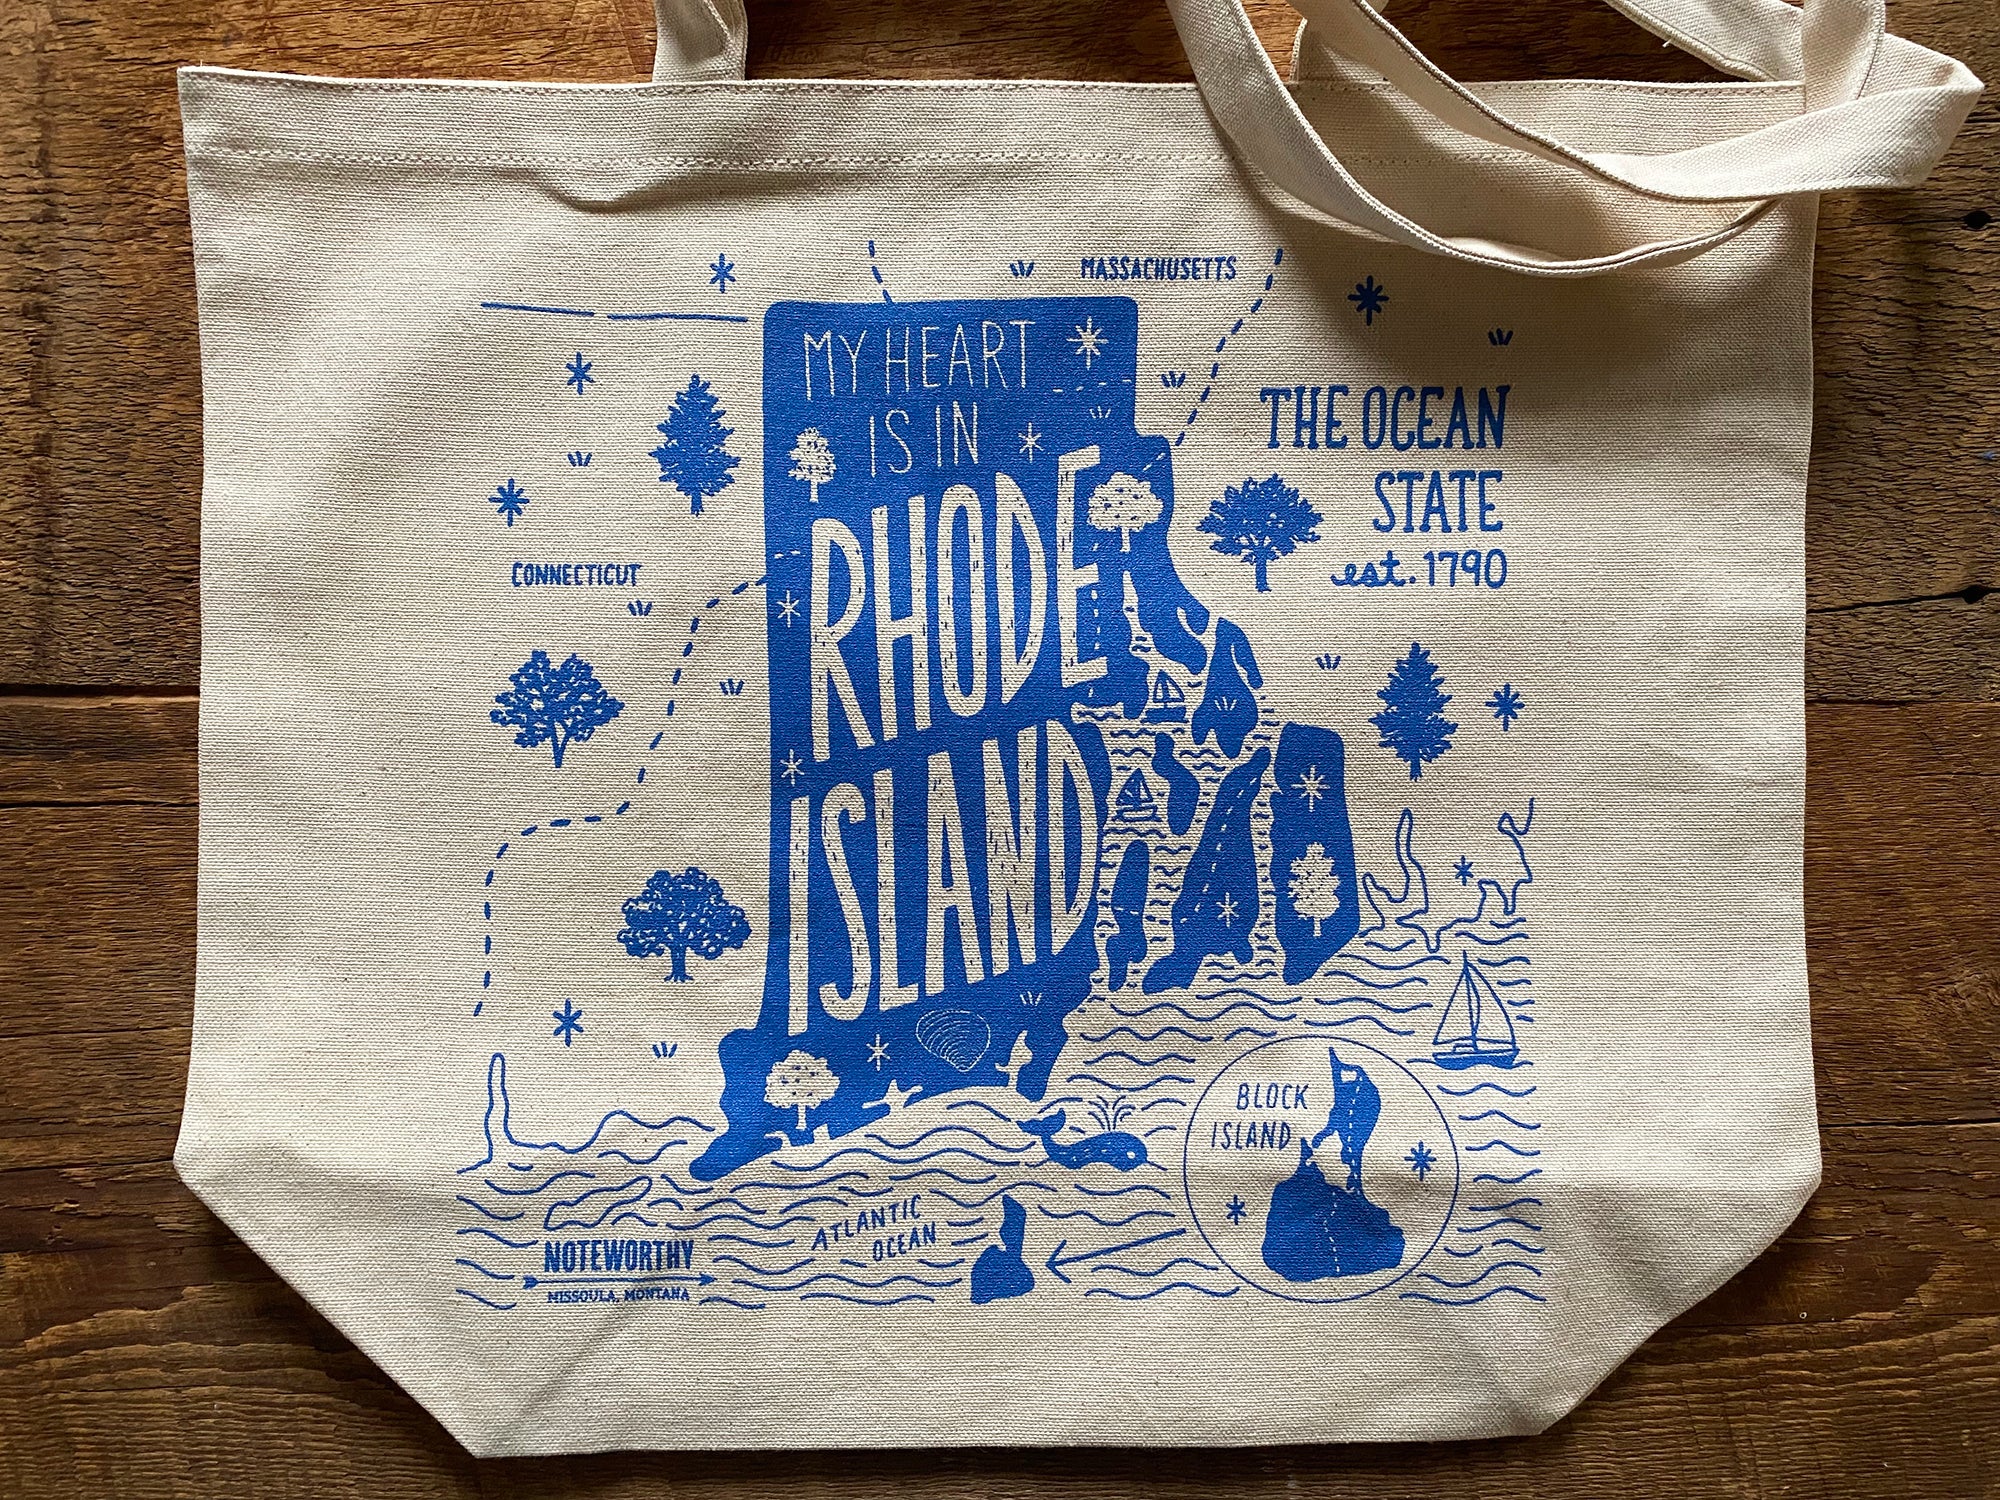 Rhode Island's bag ban misses the mark